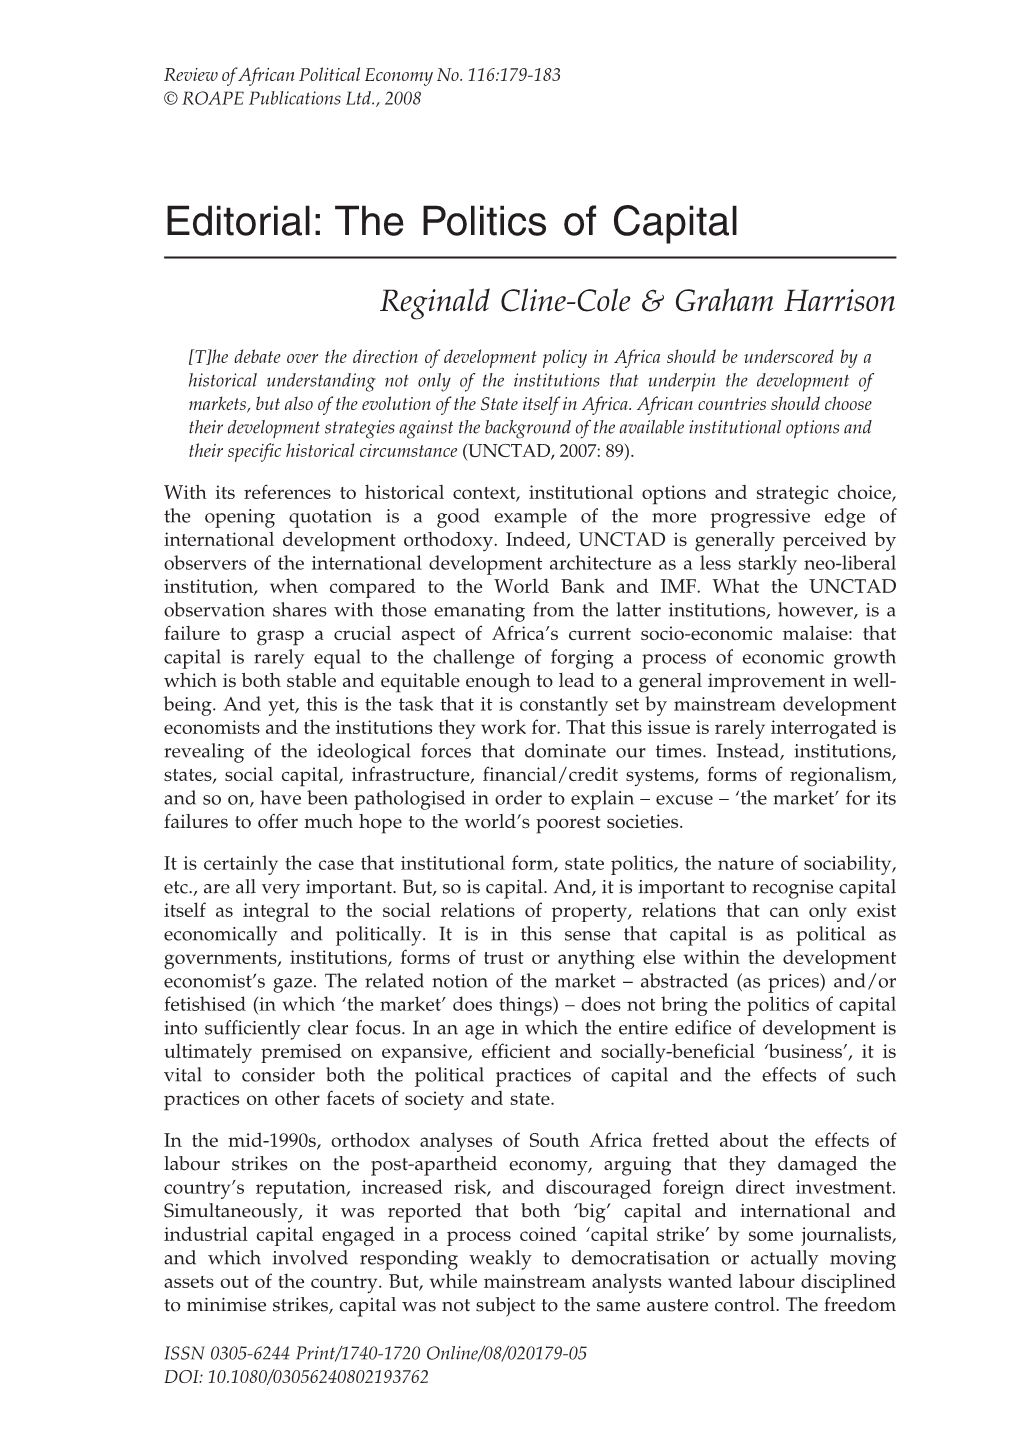 Editorial: the Politics of Capital